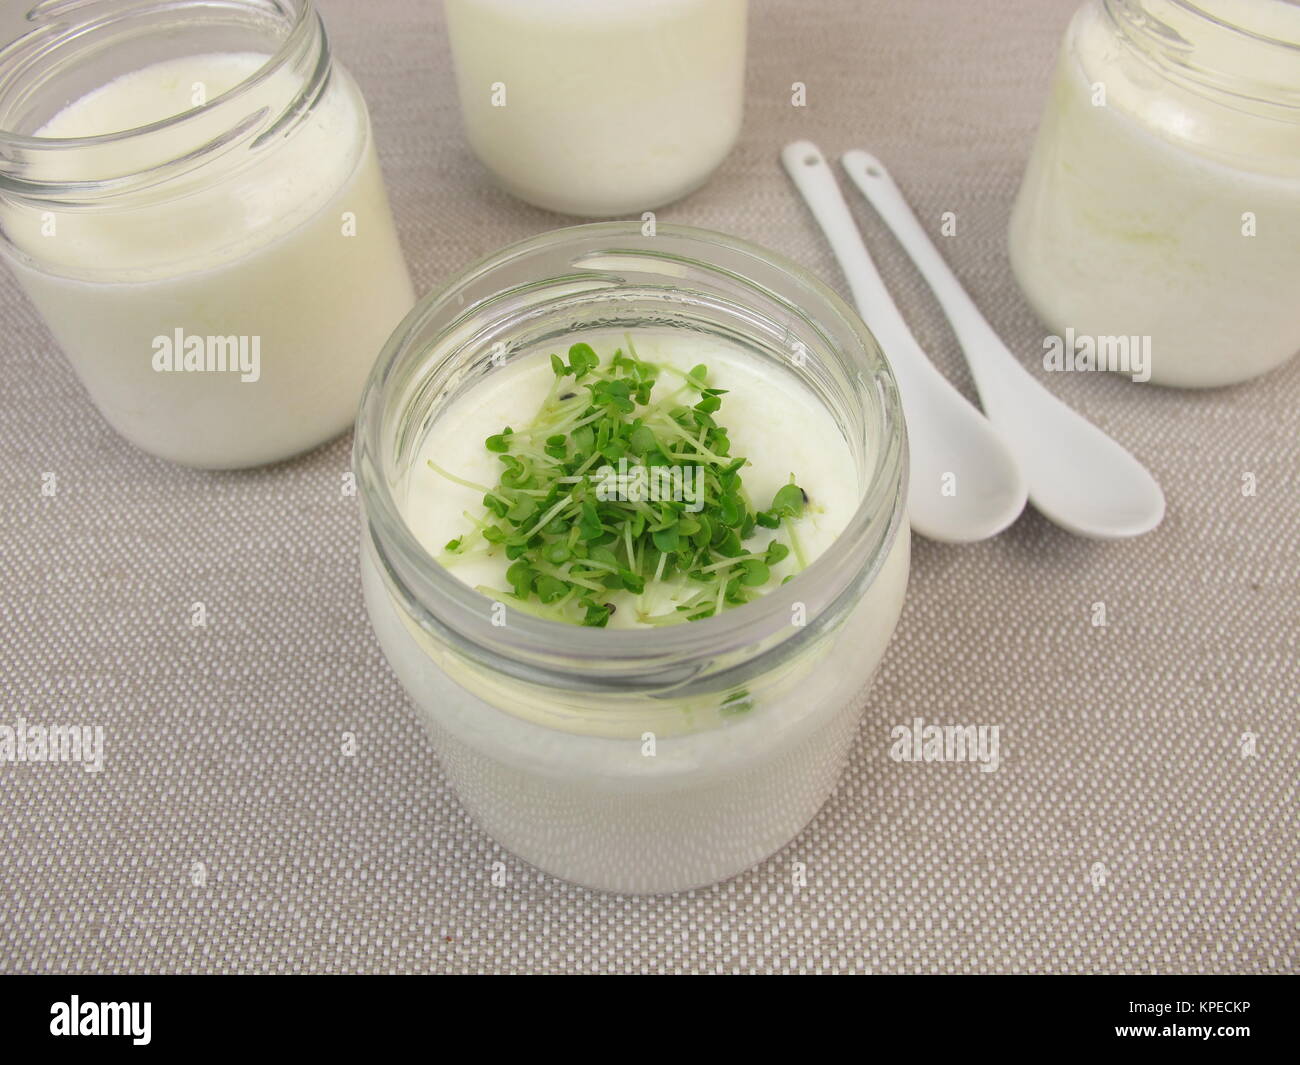 yogurt from yogurt maker with basil sprouts Stock Photo